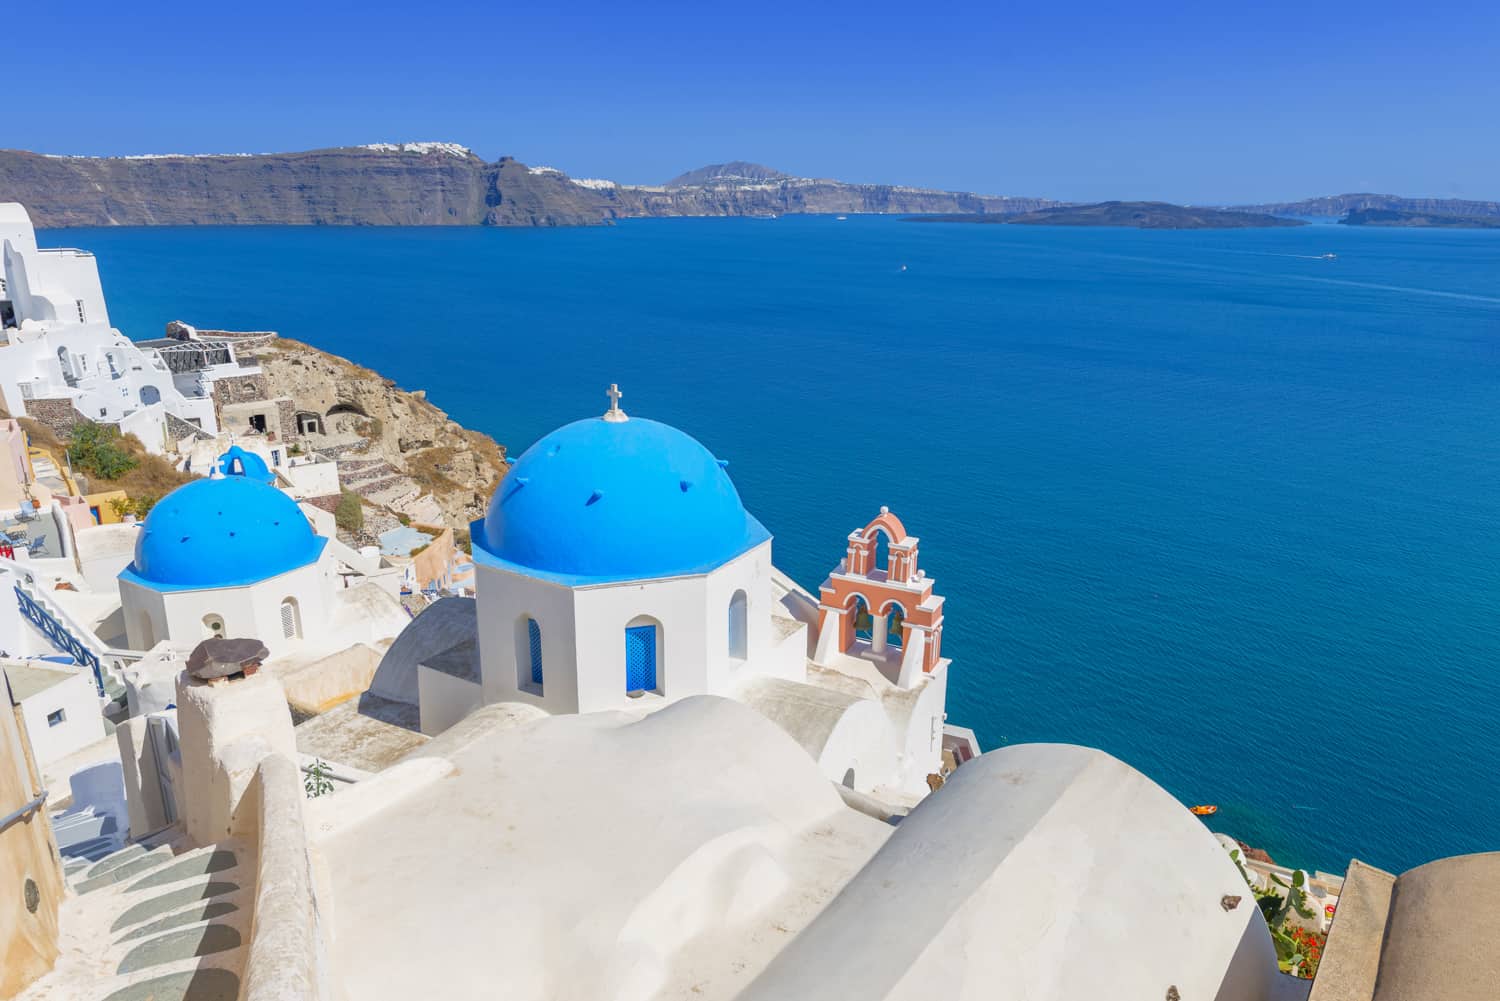 Greek Islands Tours Holidays to popular islands